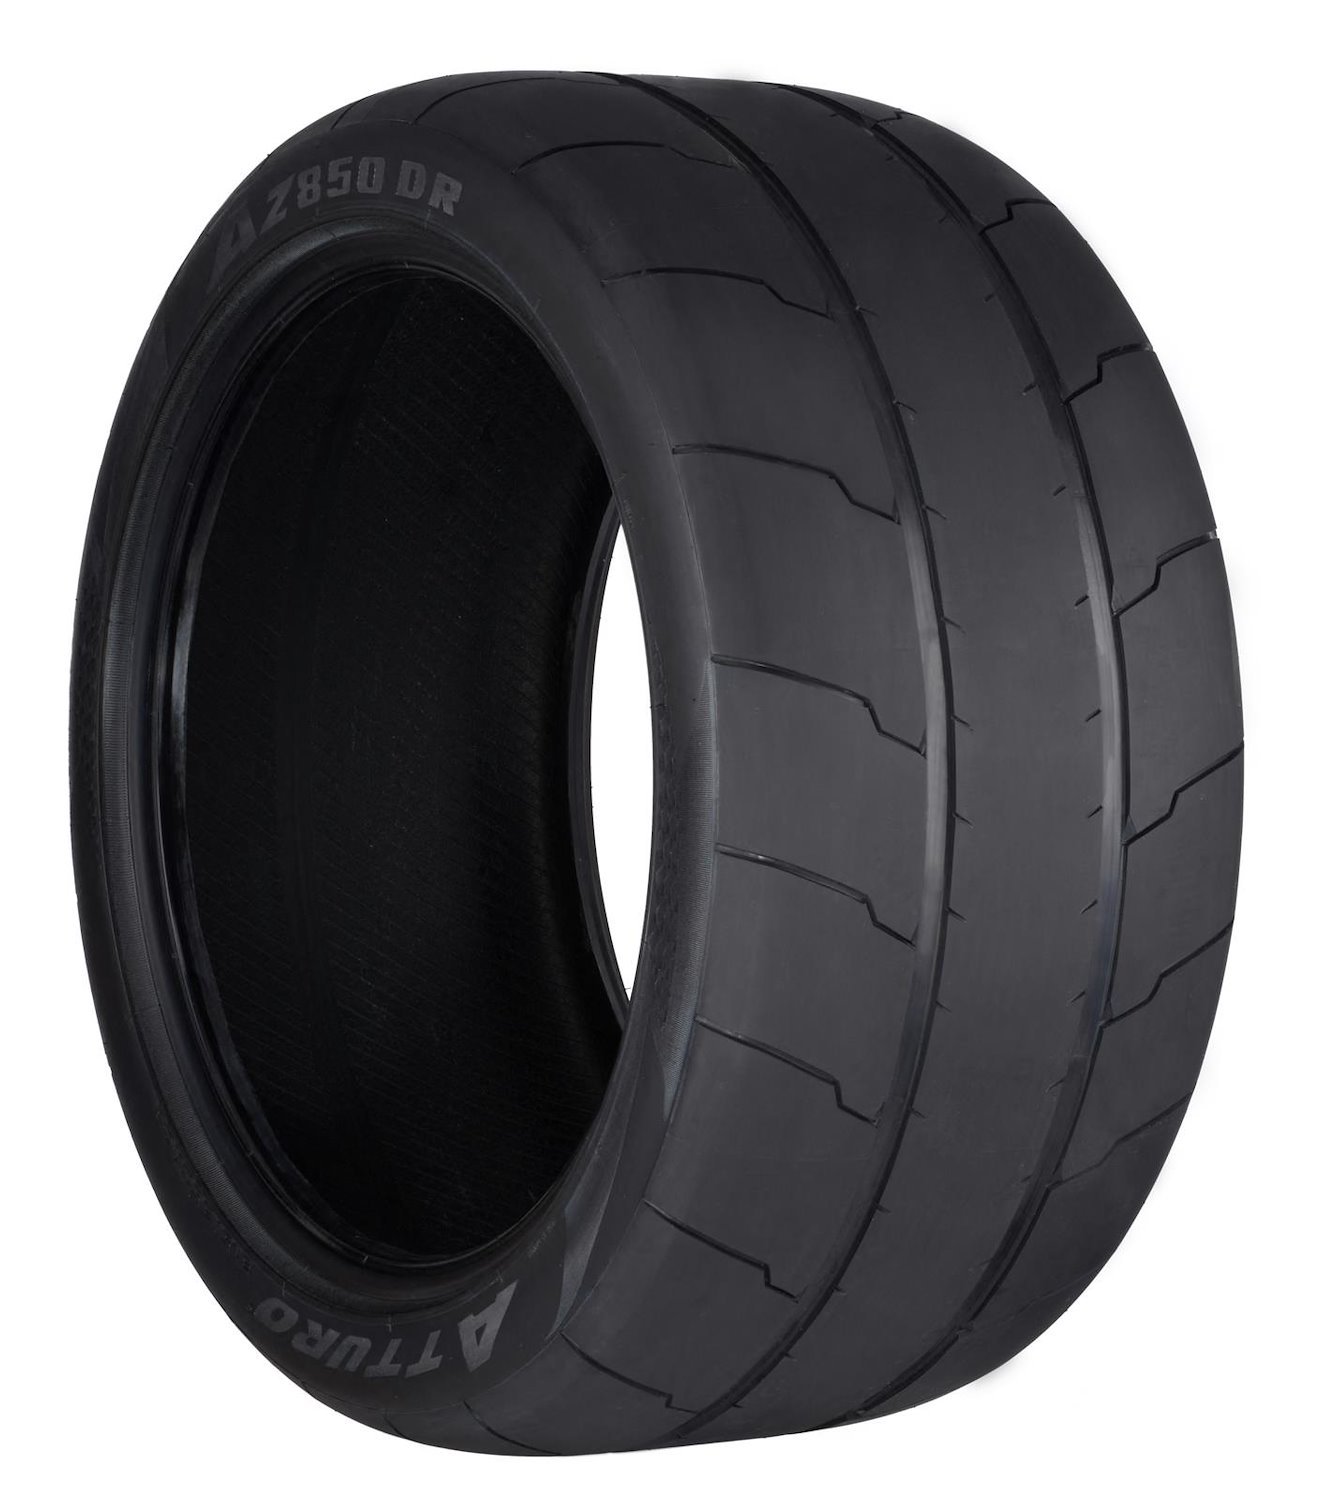 AZ 850 DR Drag Radial Tire, 315/40R18